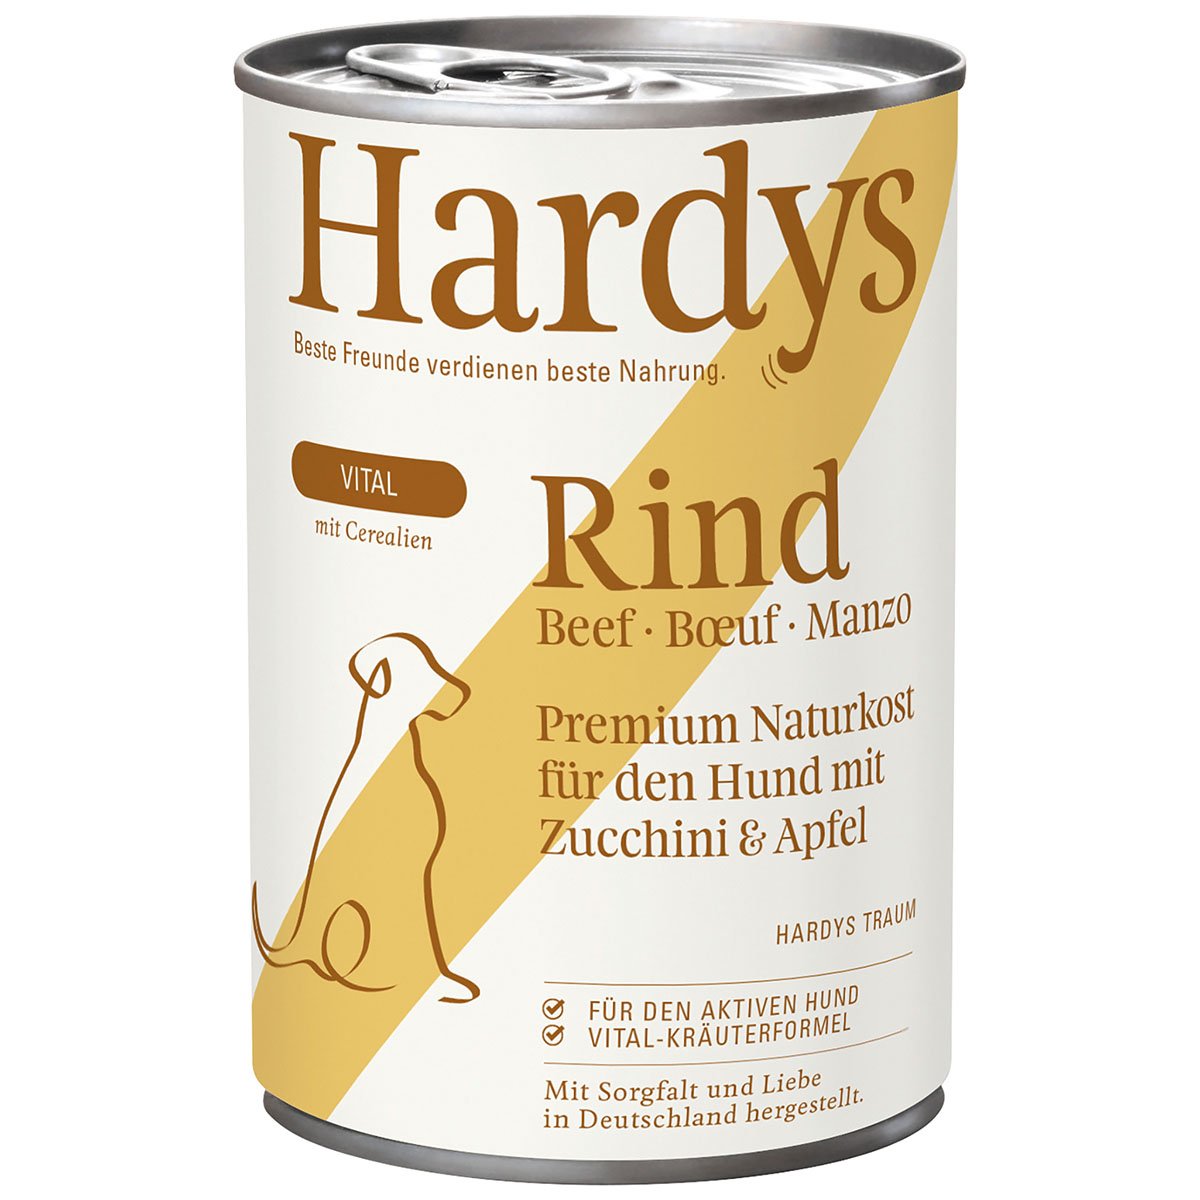 Hardys VITAL Rind mit Zucchini & Apfel 6x400g